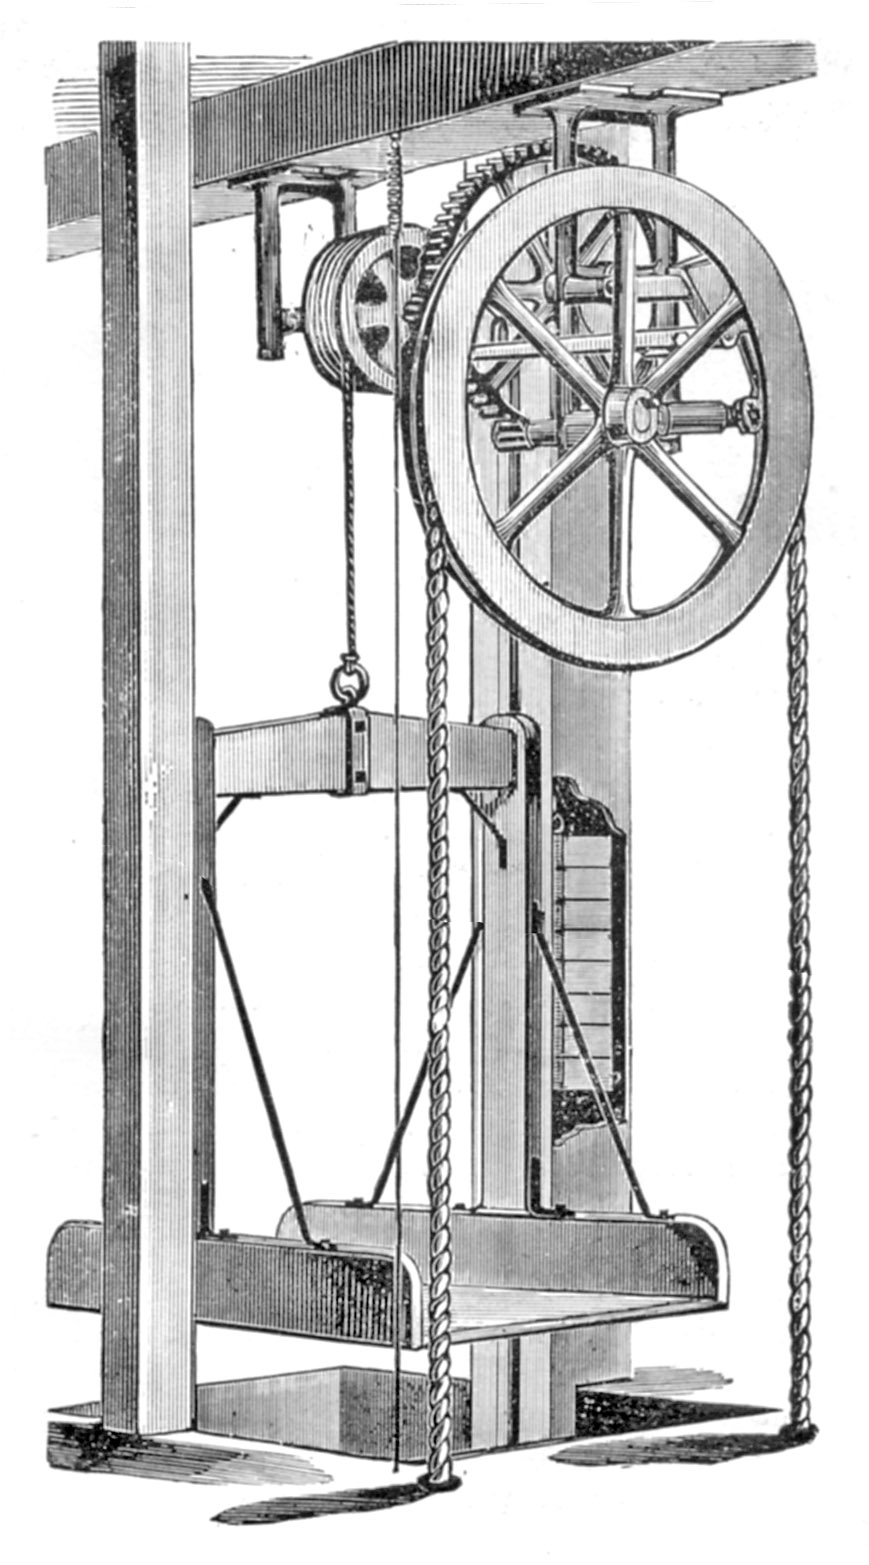 Edwin Harrington, Hand Power Elevators, pages 142-143